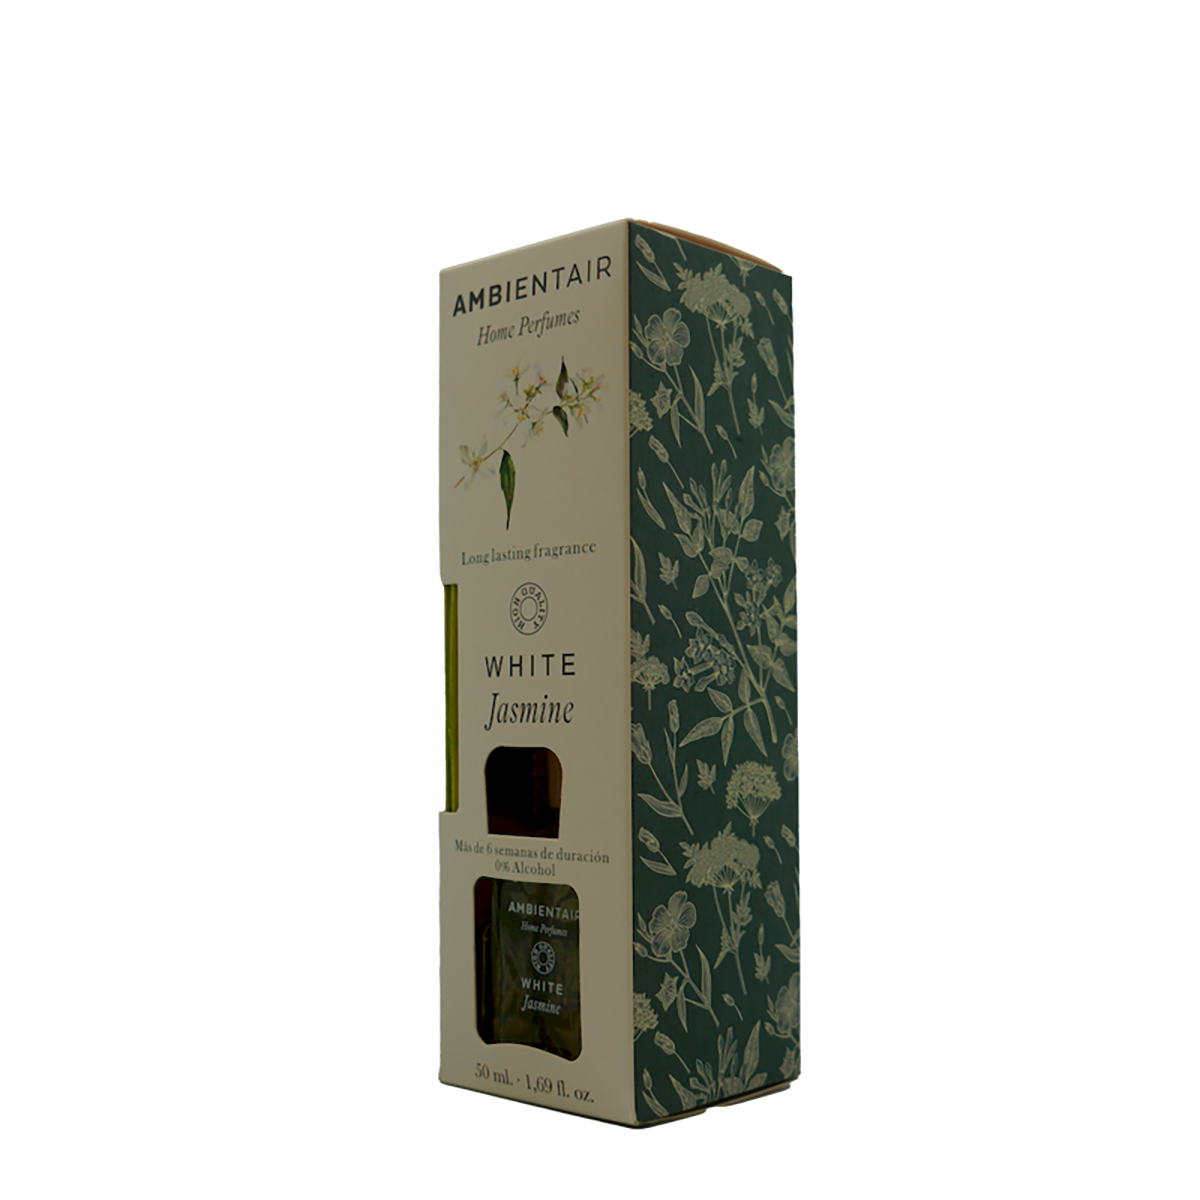 Mikado White Jasmine Home Perfumes Ambientair 50 Ml